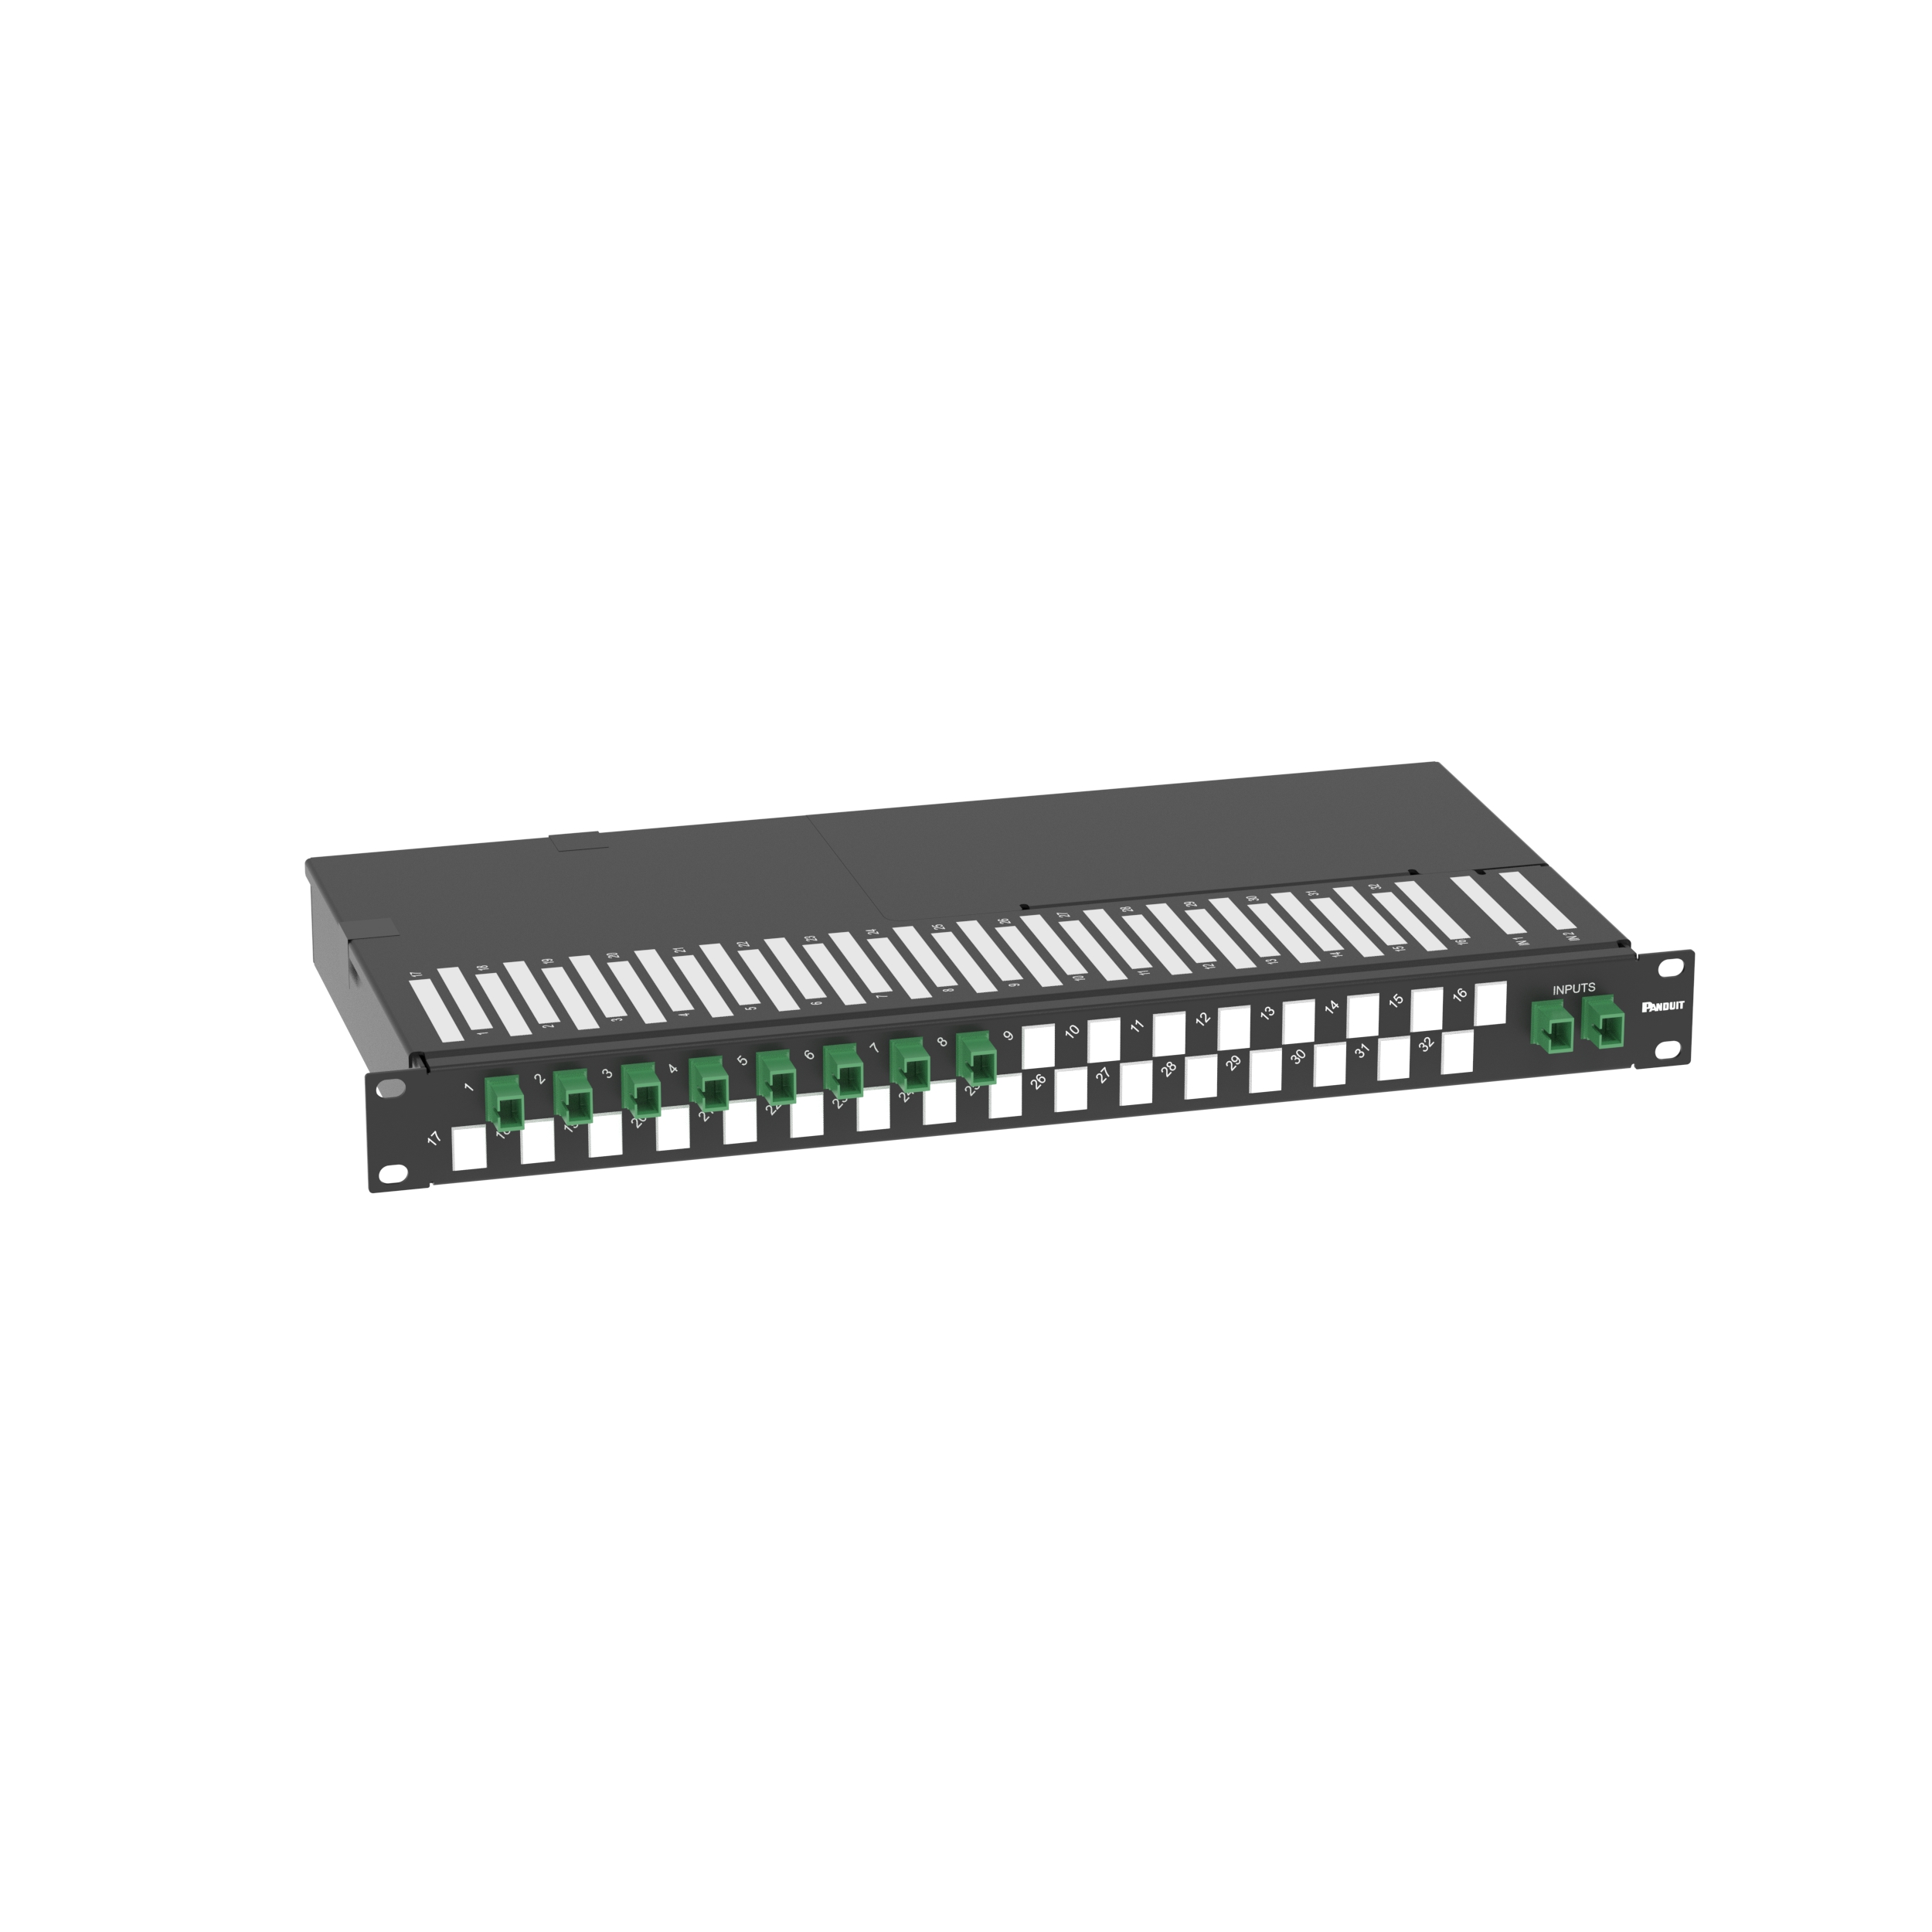 1 RU Splitter Tray for PON, 2 x SC-APC Input to 8 x SC-APC Outputs (2 x 8)